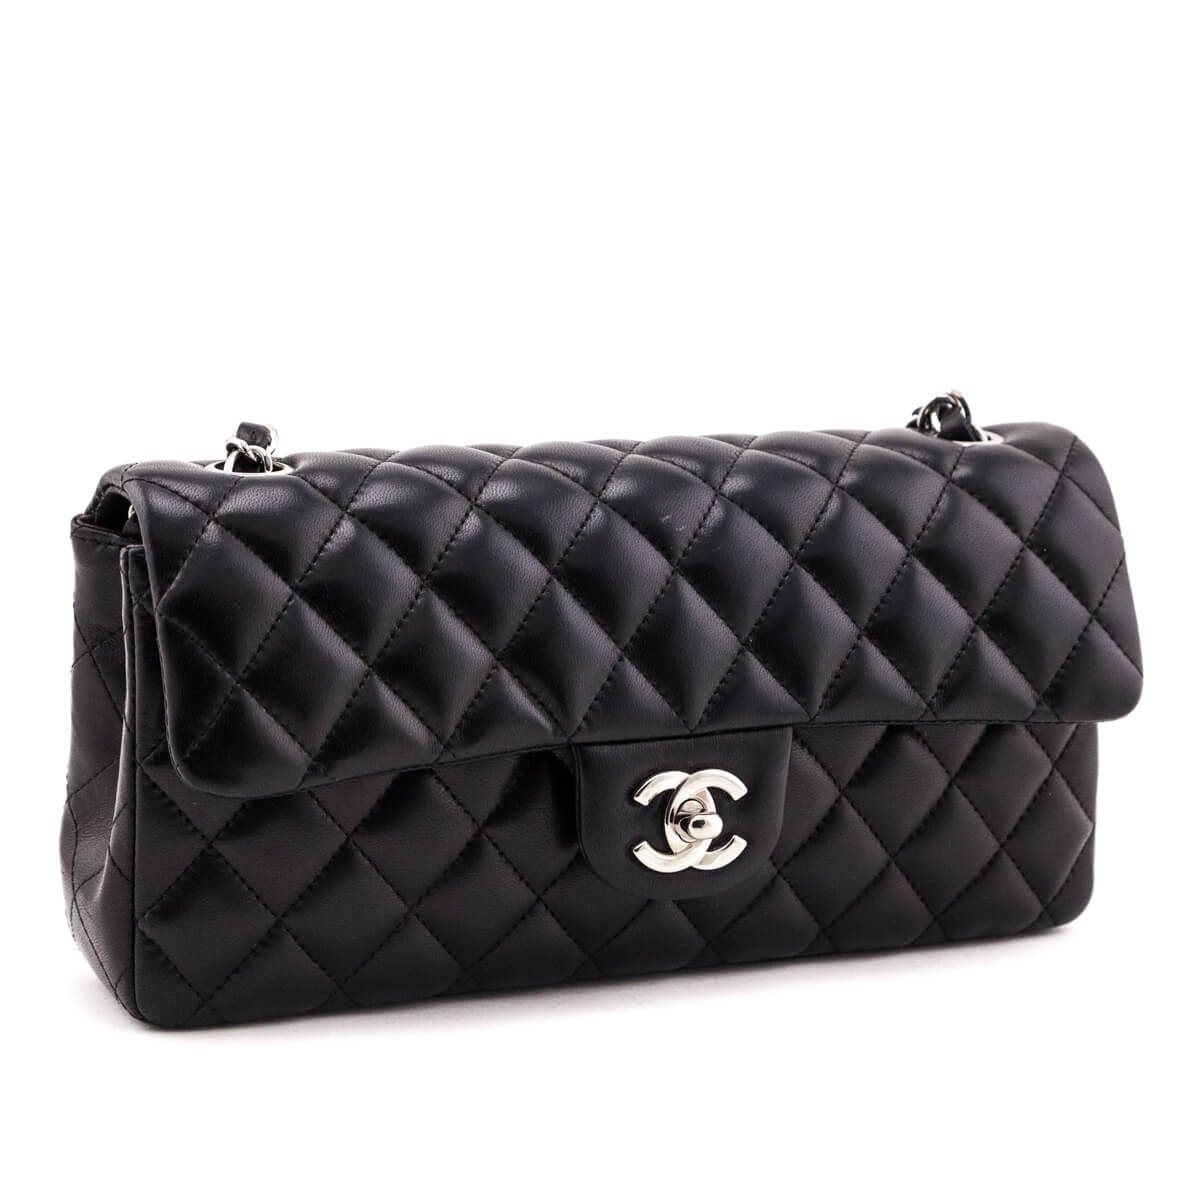 W Flap Bag - Love that Bag etc - Preowned Authentic Designer Handbags & Preloved Fashions